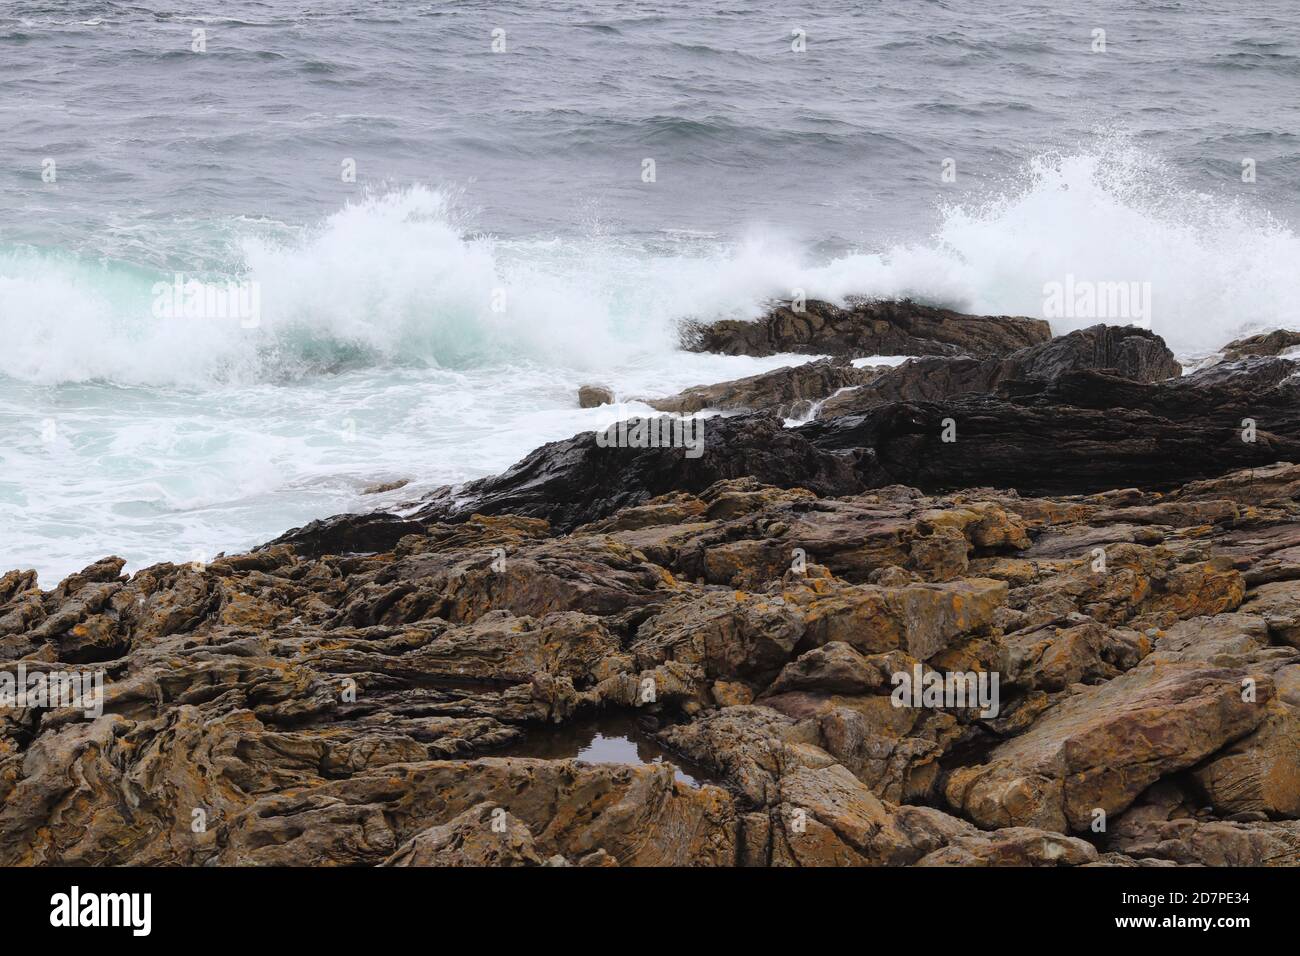 Waves breaking on rocks Stock Photo - Alamy